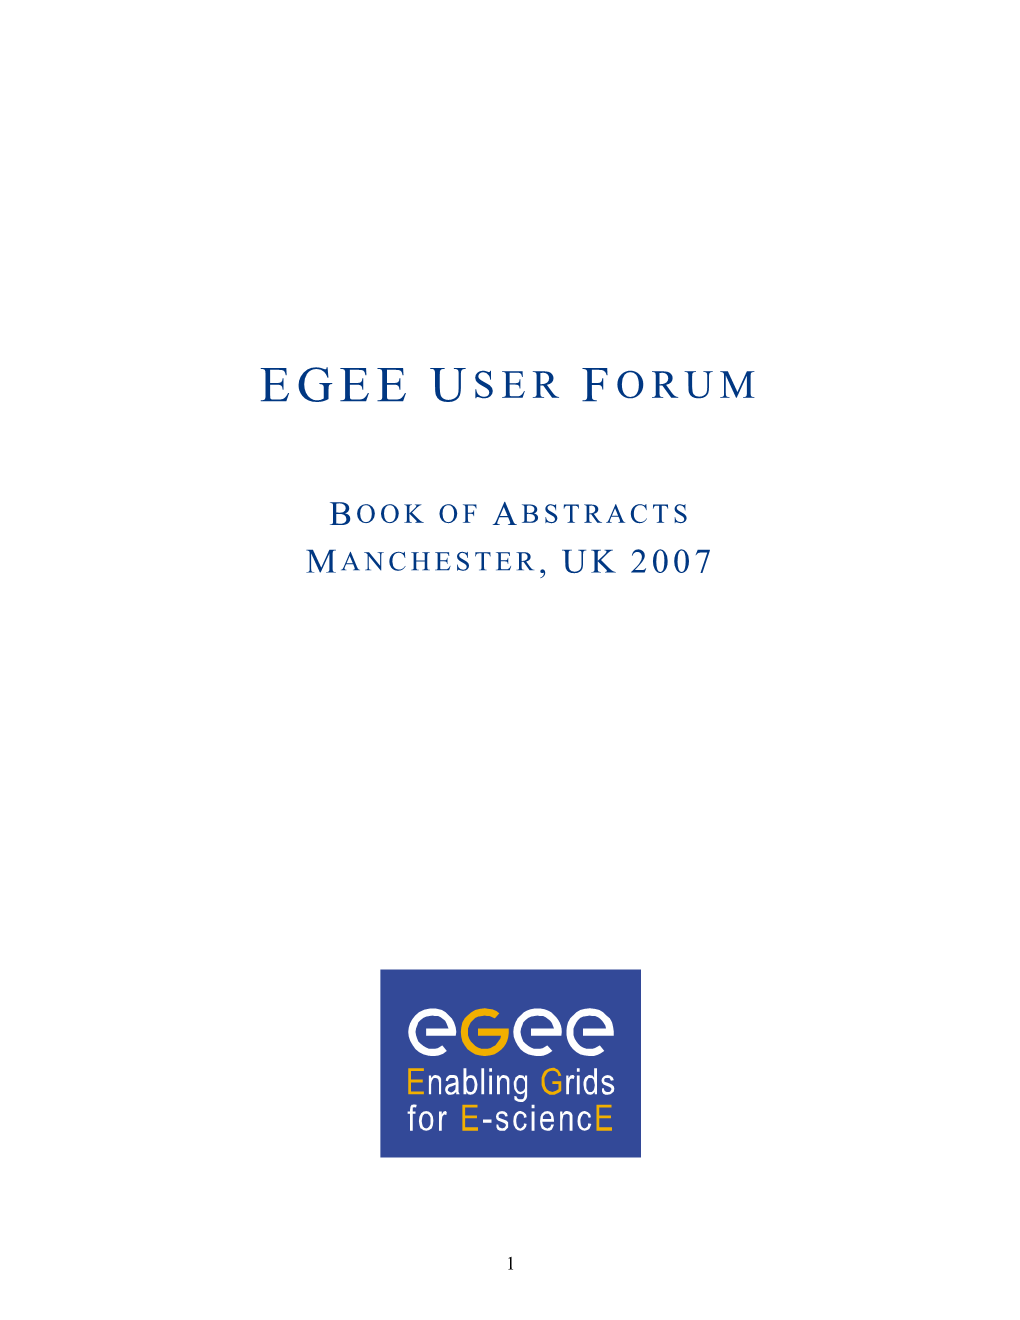 EGEE User Forum Manchester